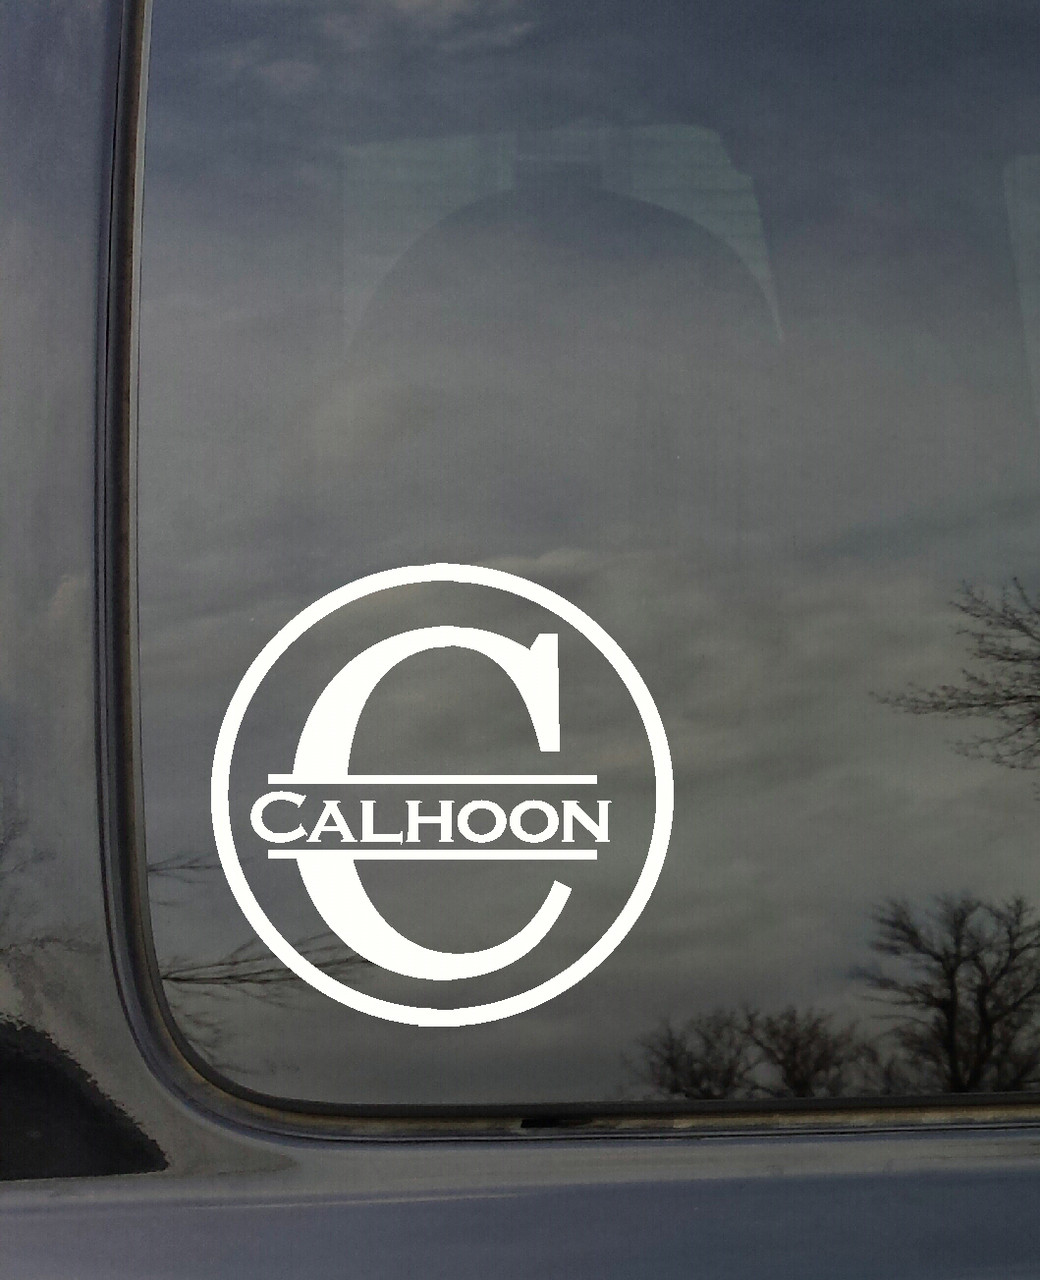 Monogram decal Custom Vinyl Monogram car truck window sticker